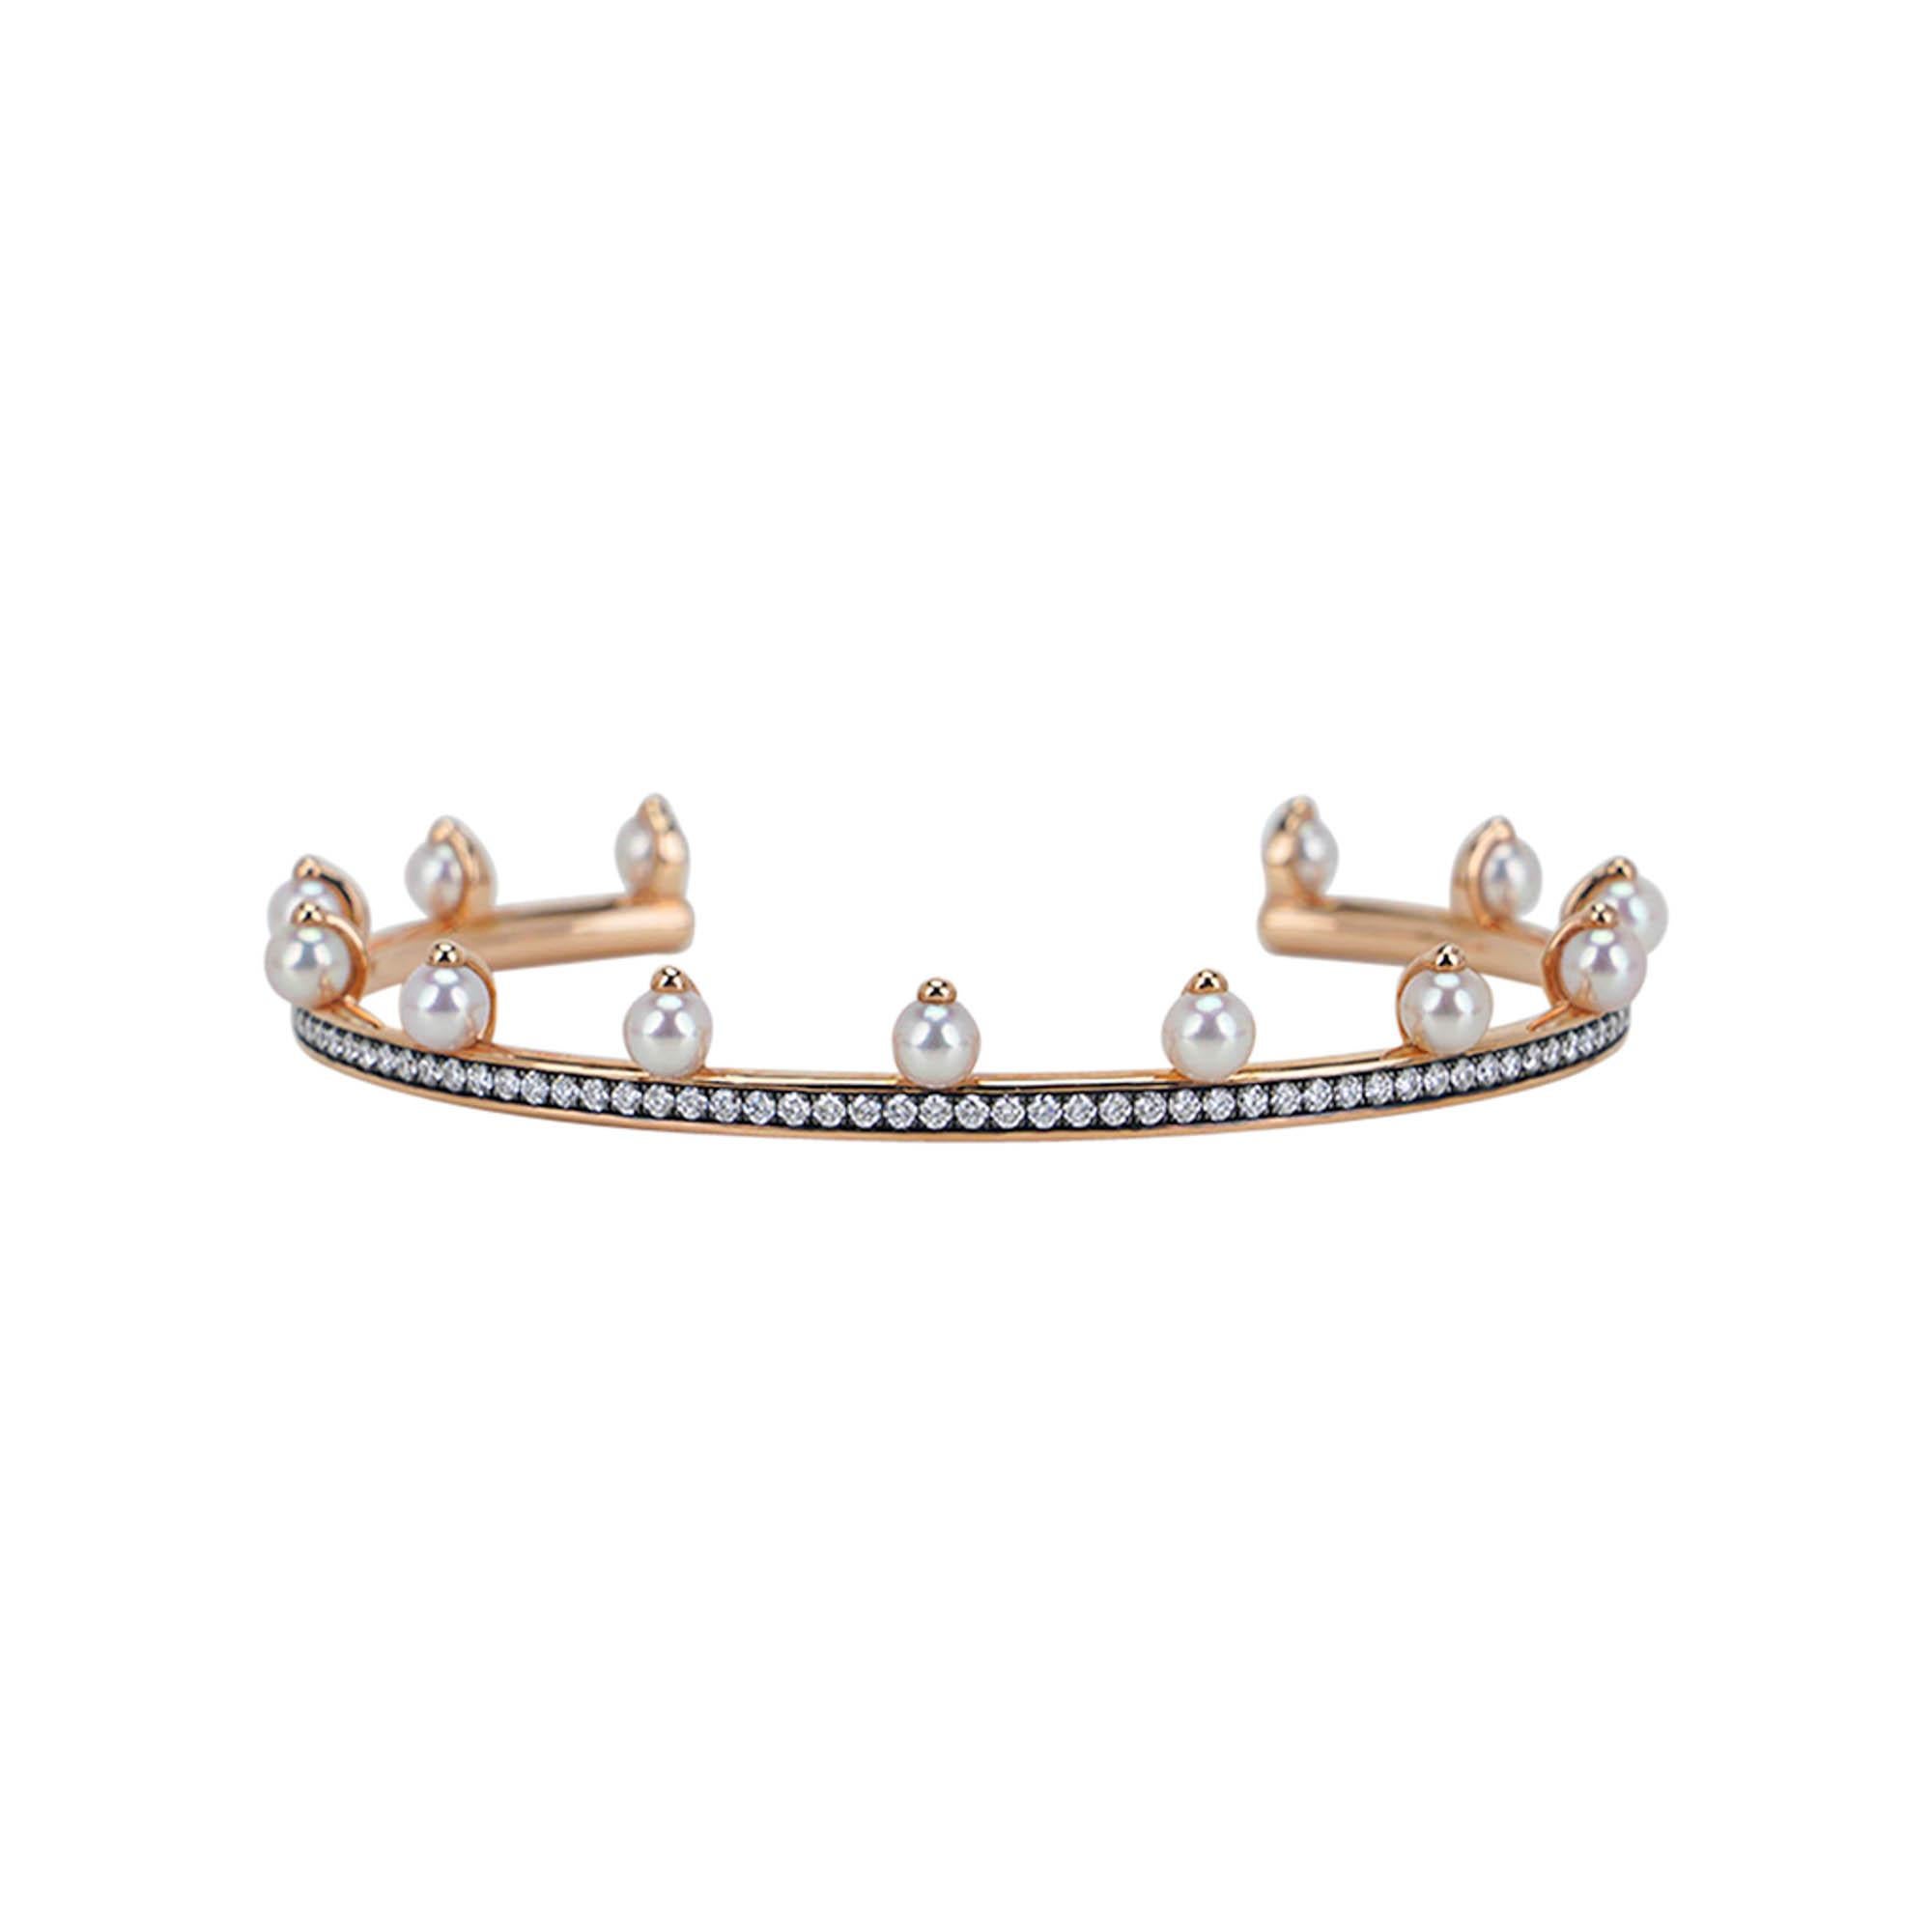 Taille brillant Hermes Chandra Jonc Bracelet manchette en perles et diamants or rose 18k en vente